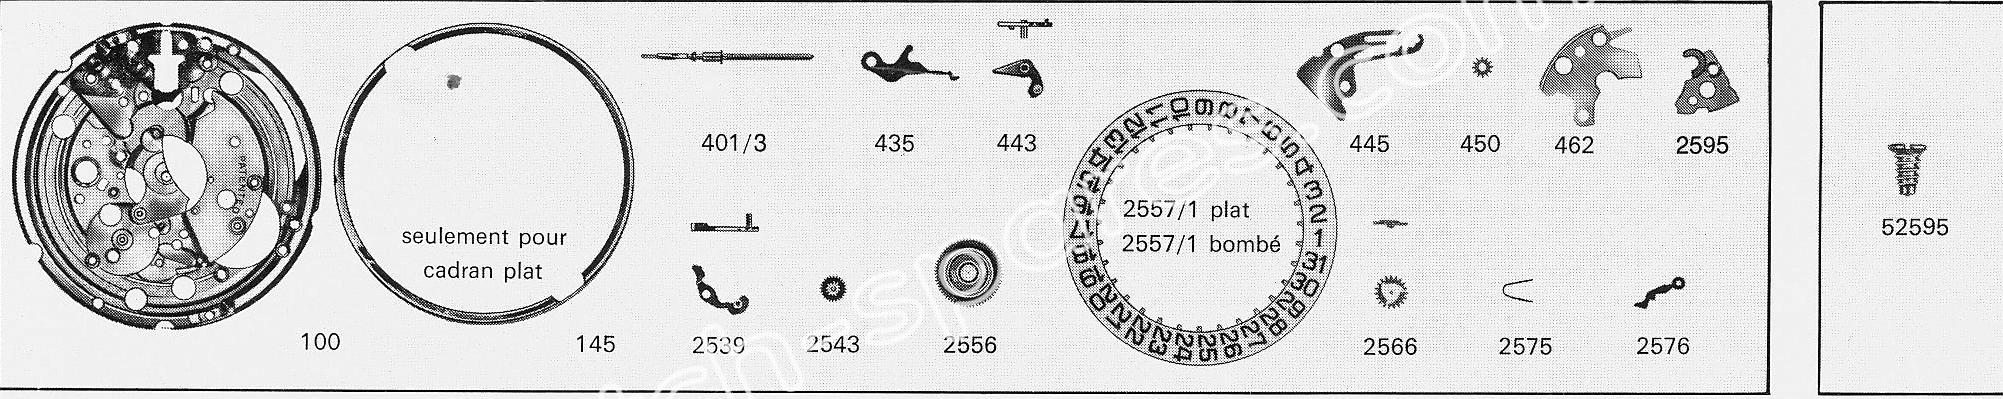 ETA 2806 watch date spare parts